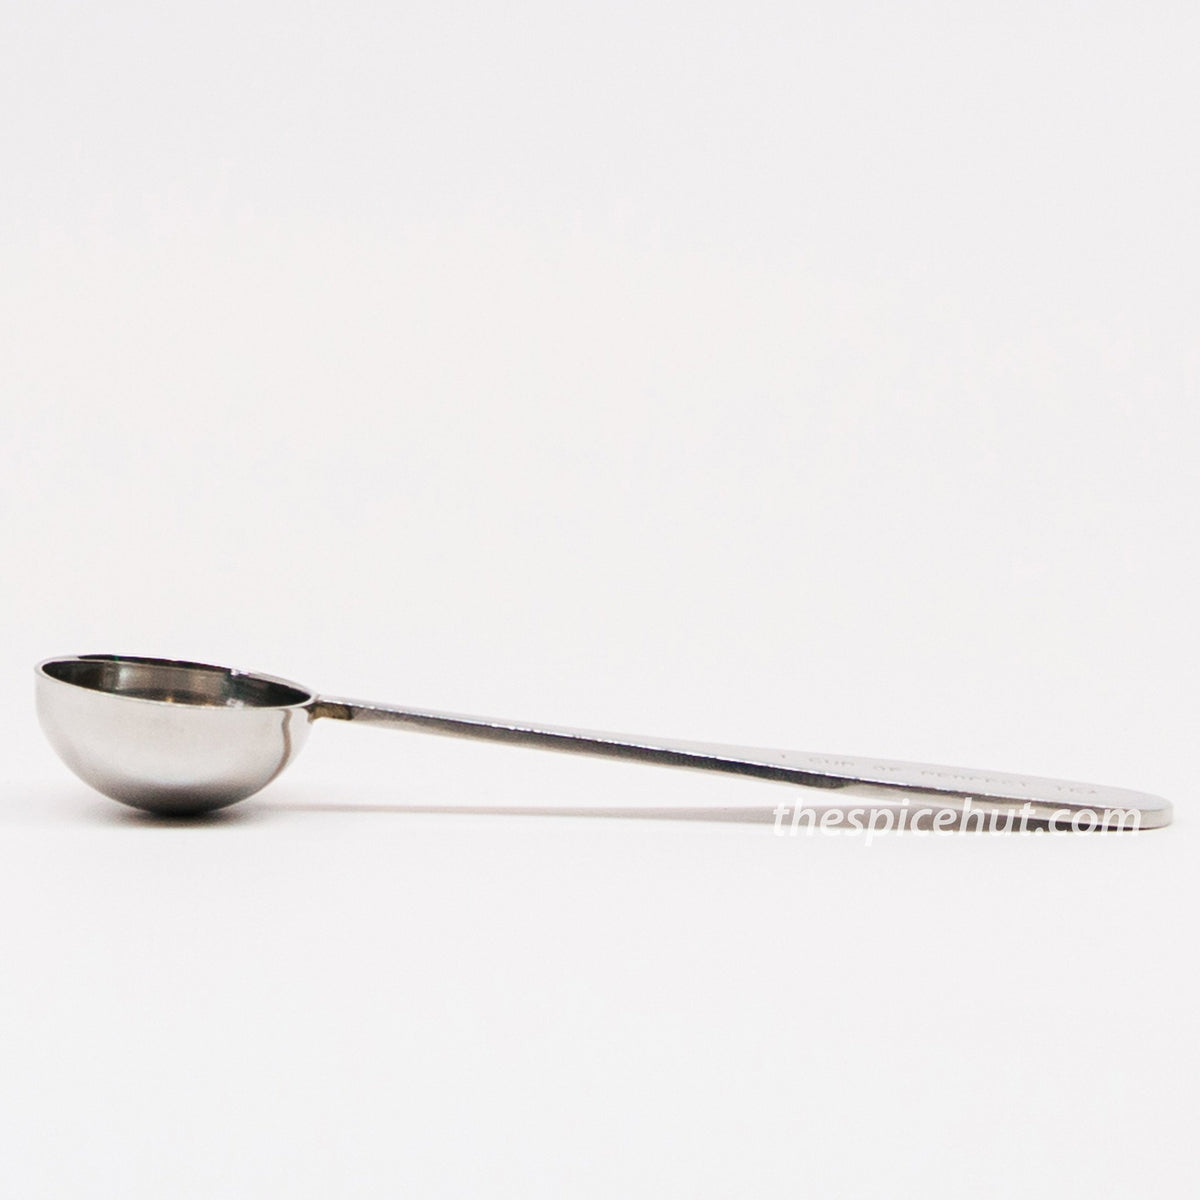 1 Cup - Perfect Tea Measuring Spoon